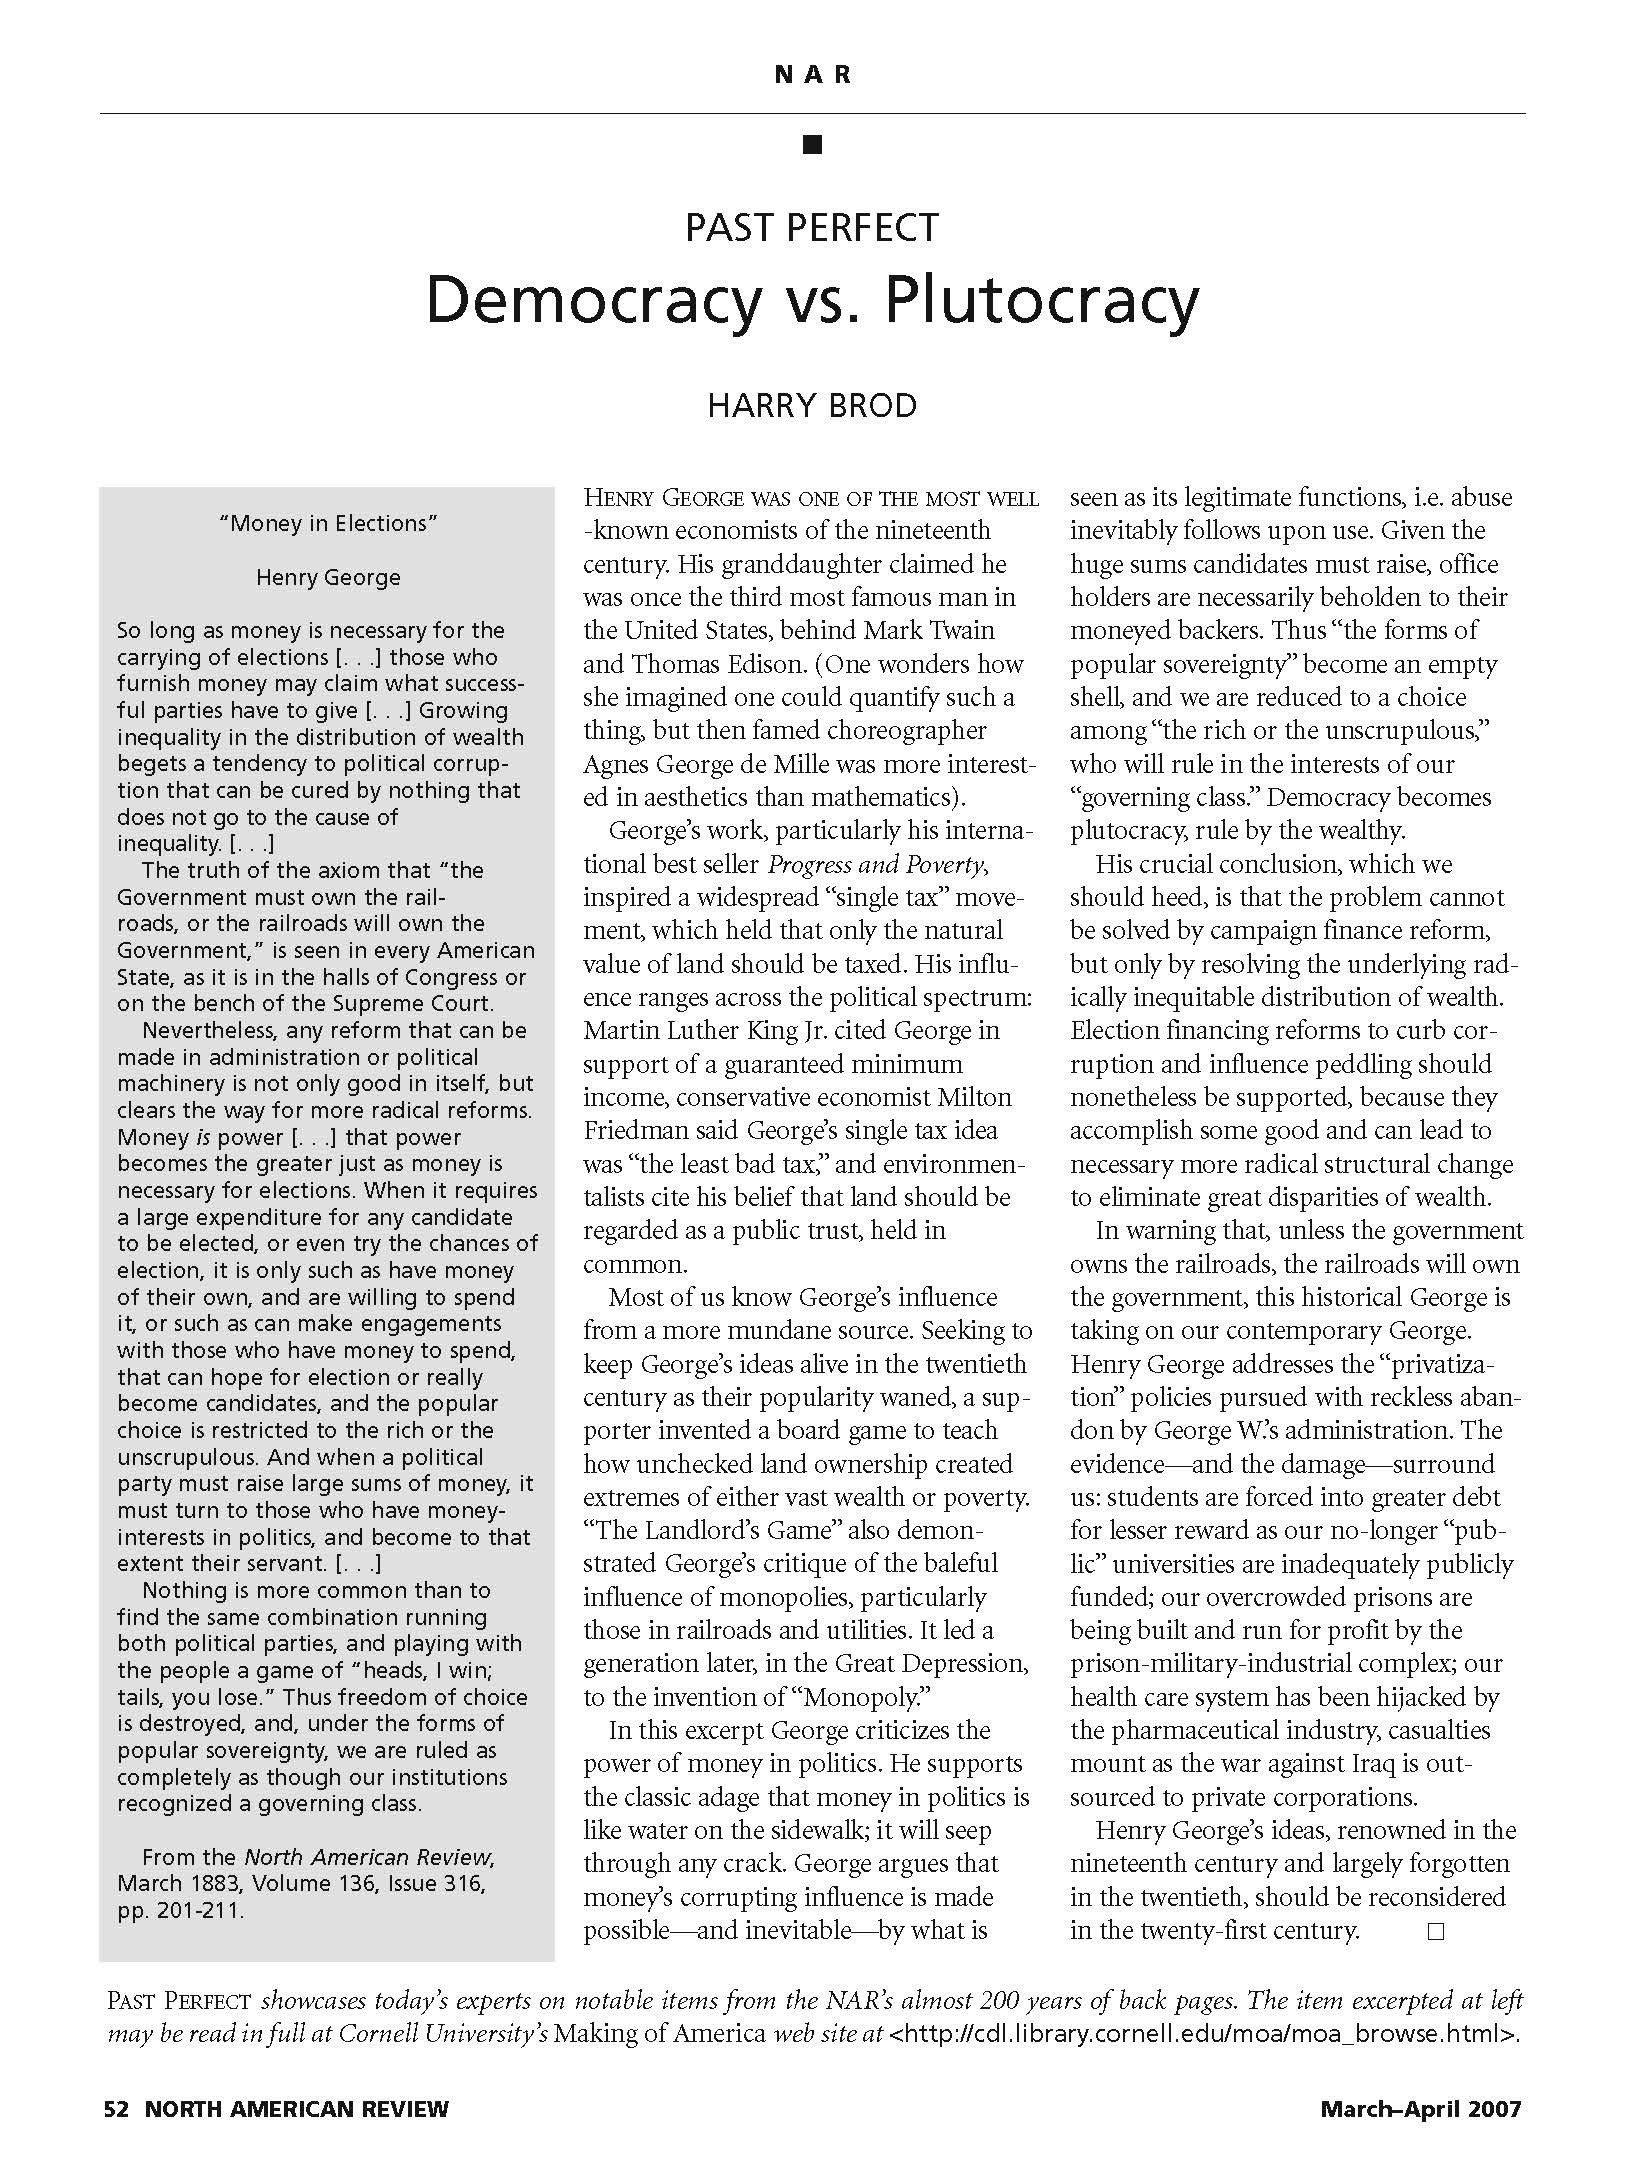 plutocracy vs democracy